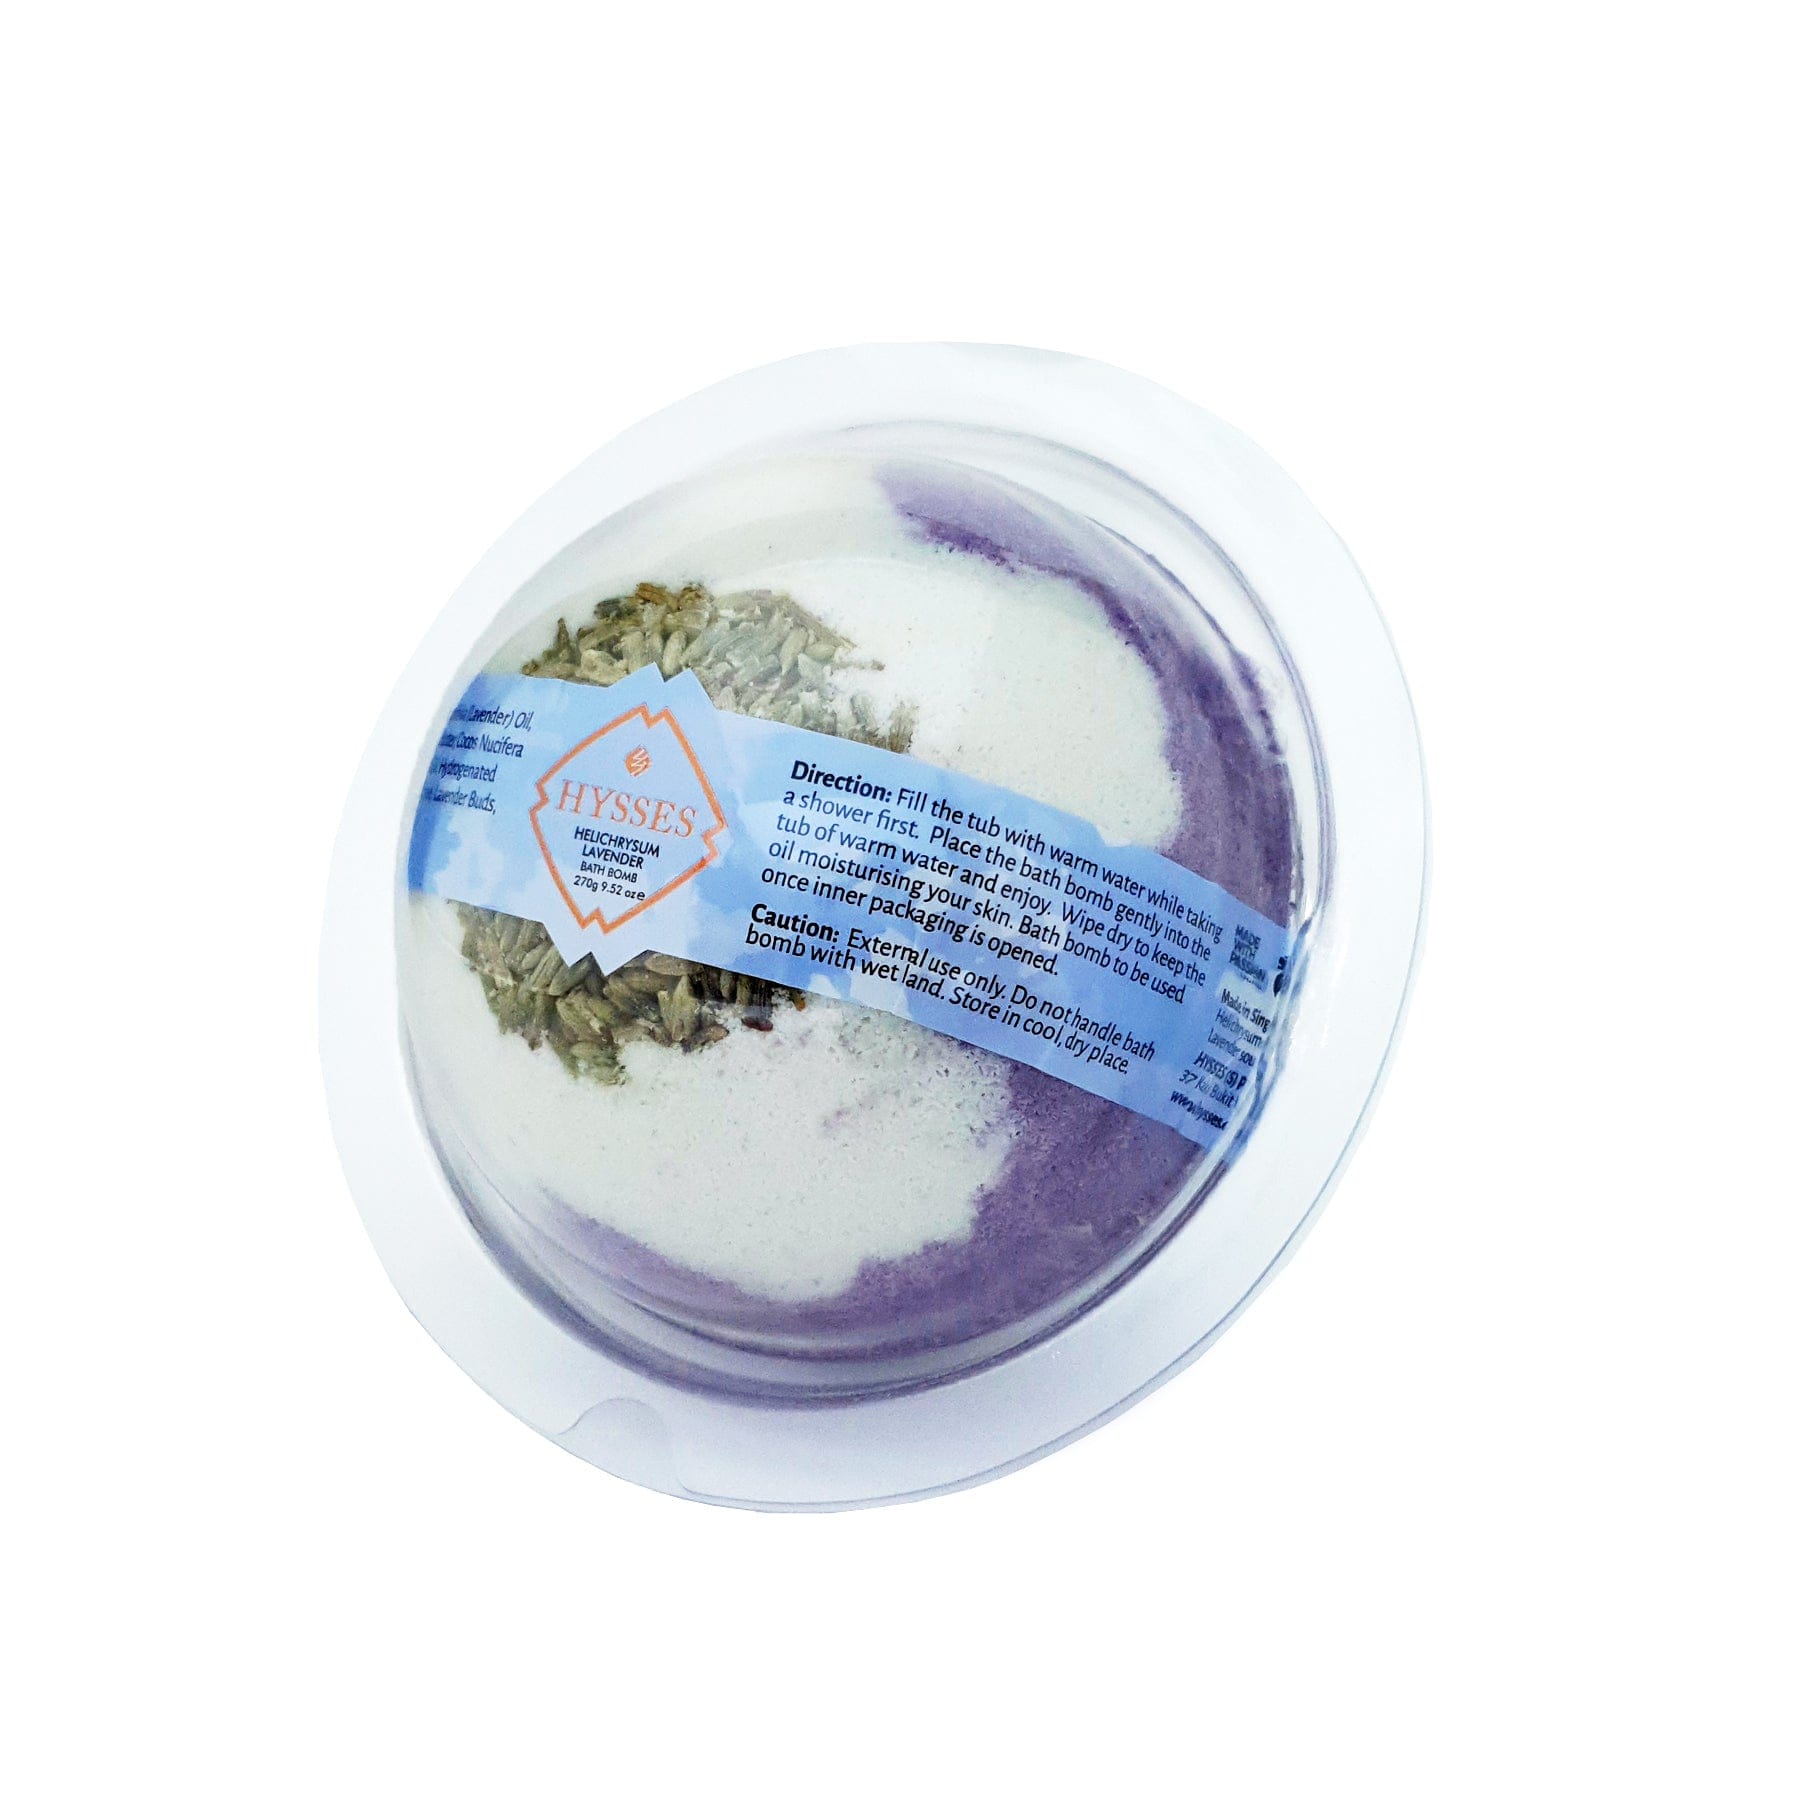 Hysses Body Care Bath Bomb, Helichrysum Lavender